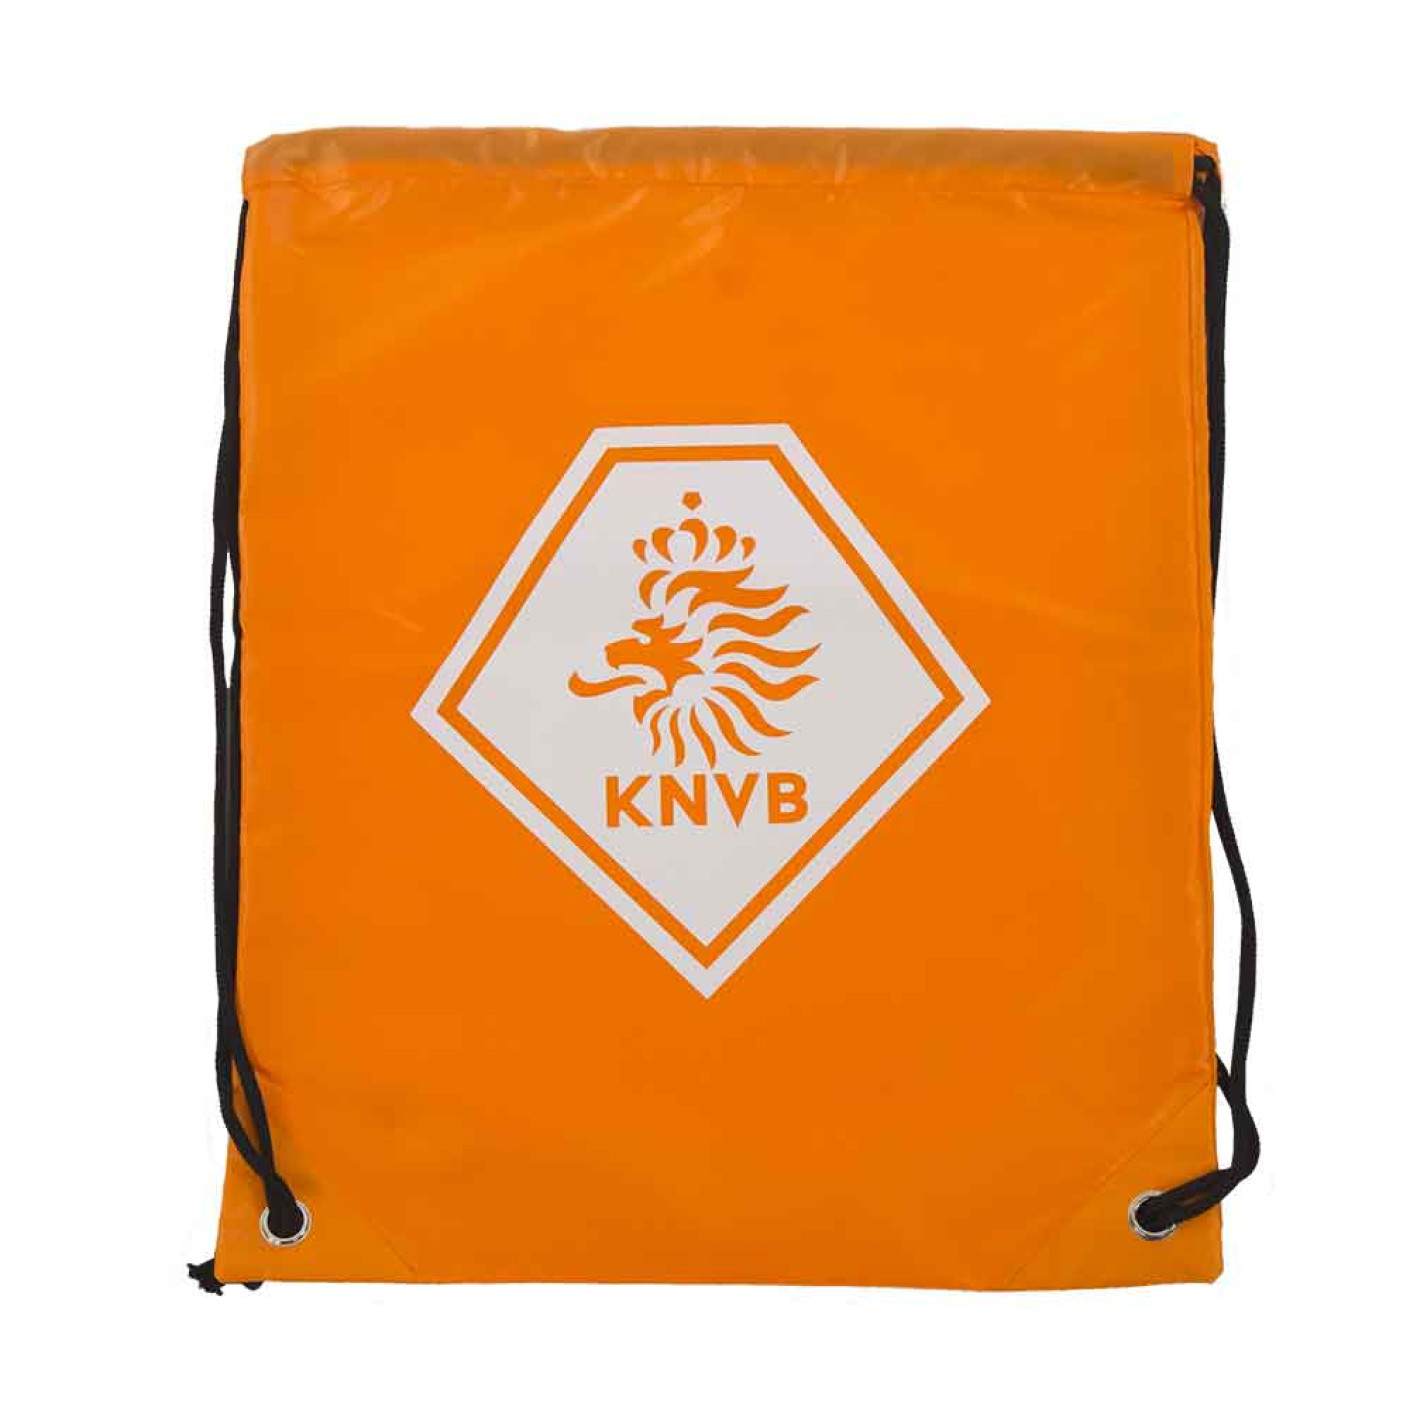 KNVB Gymbag orange white